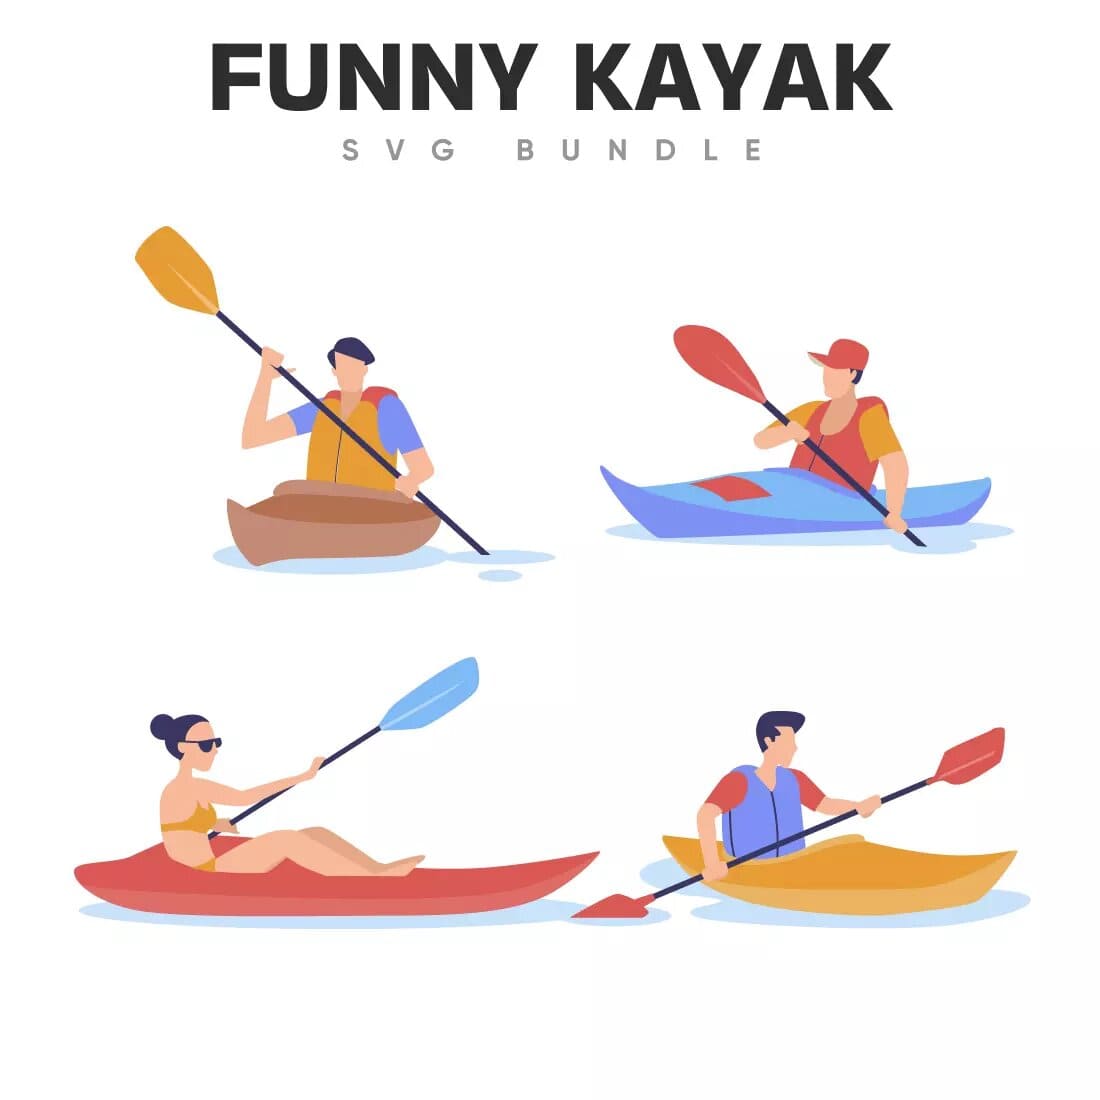 Funny Kayak SVG Bundle Preview 3.